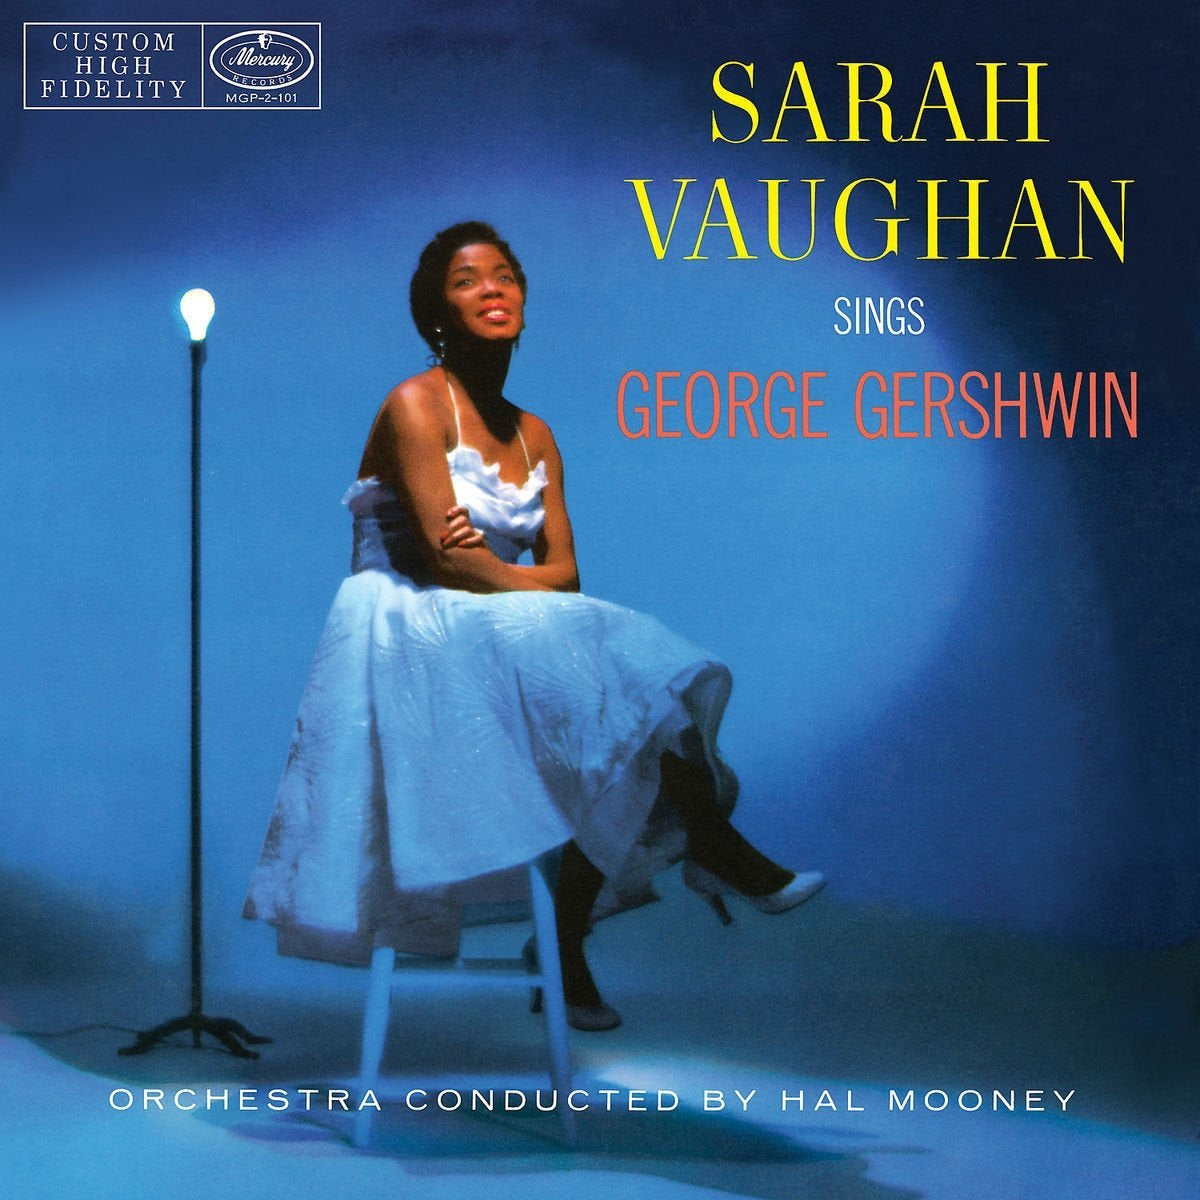 Sarah Vaughan With Hal Mooney And His Orchestra – Sarah Vaughan Sings George Gershwin (1957) New 2 LP Record 2018 Mercury Mono Vinyl - Jazz Vocal